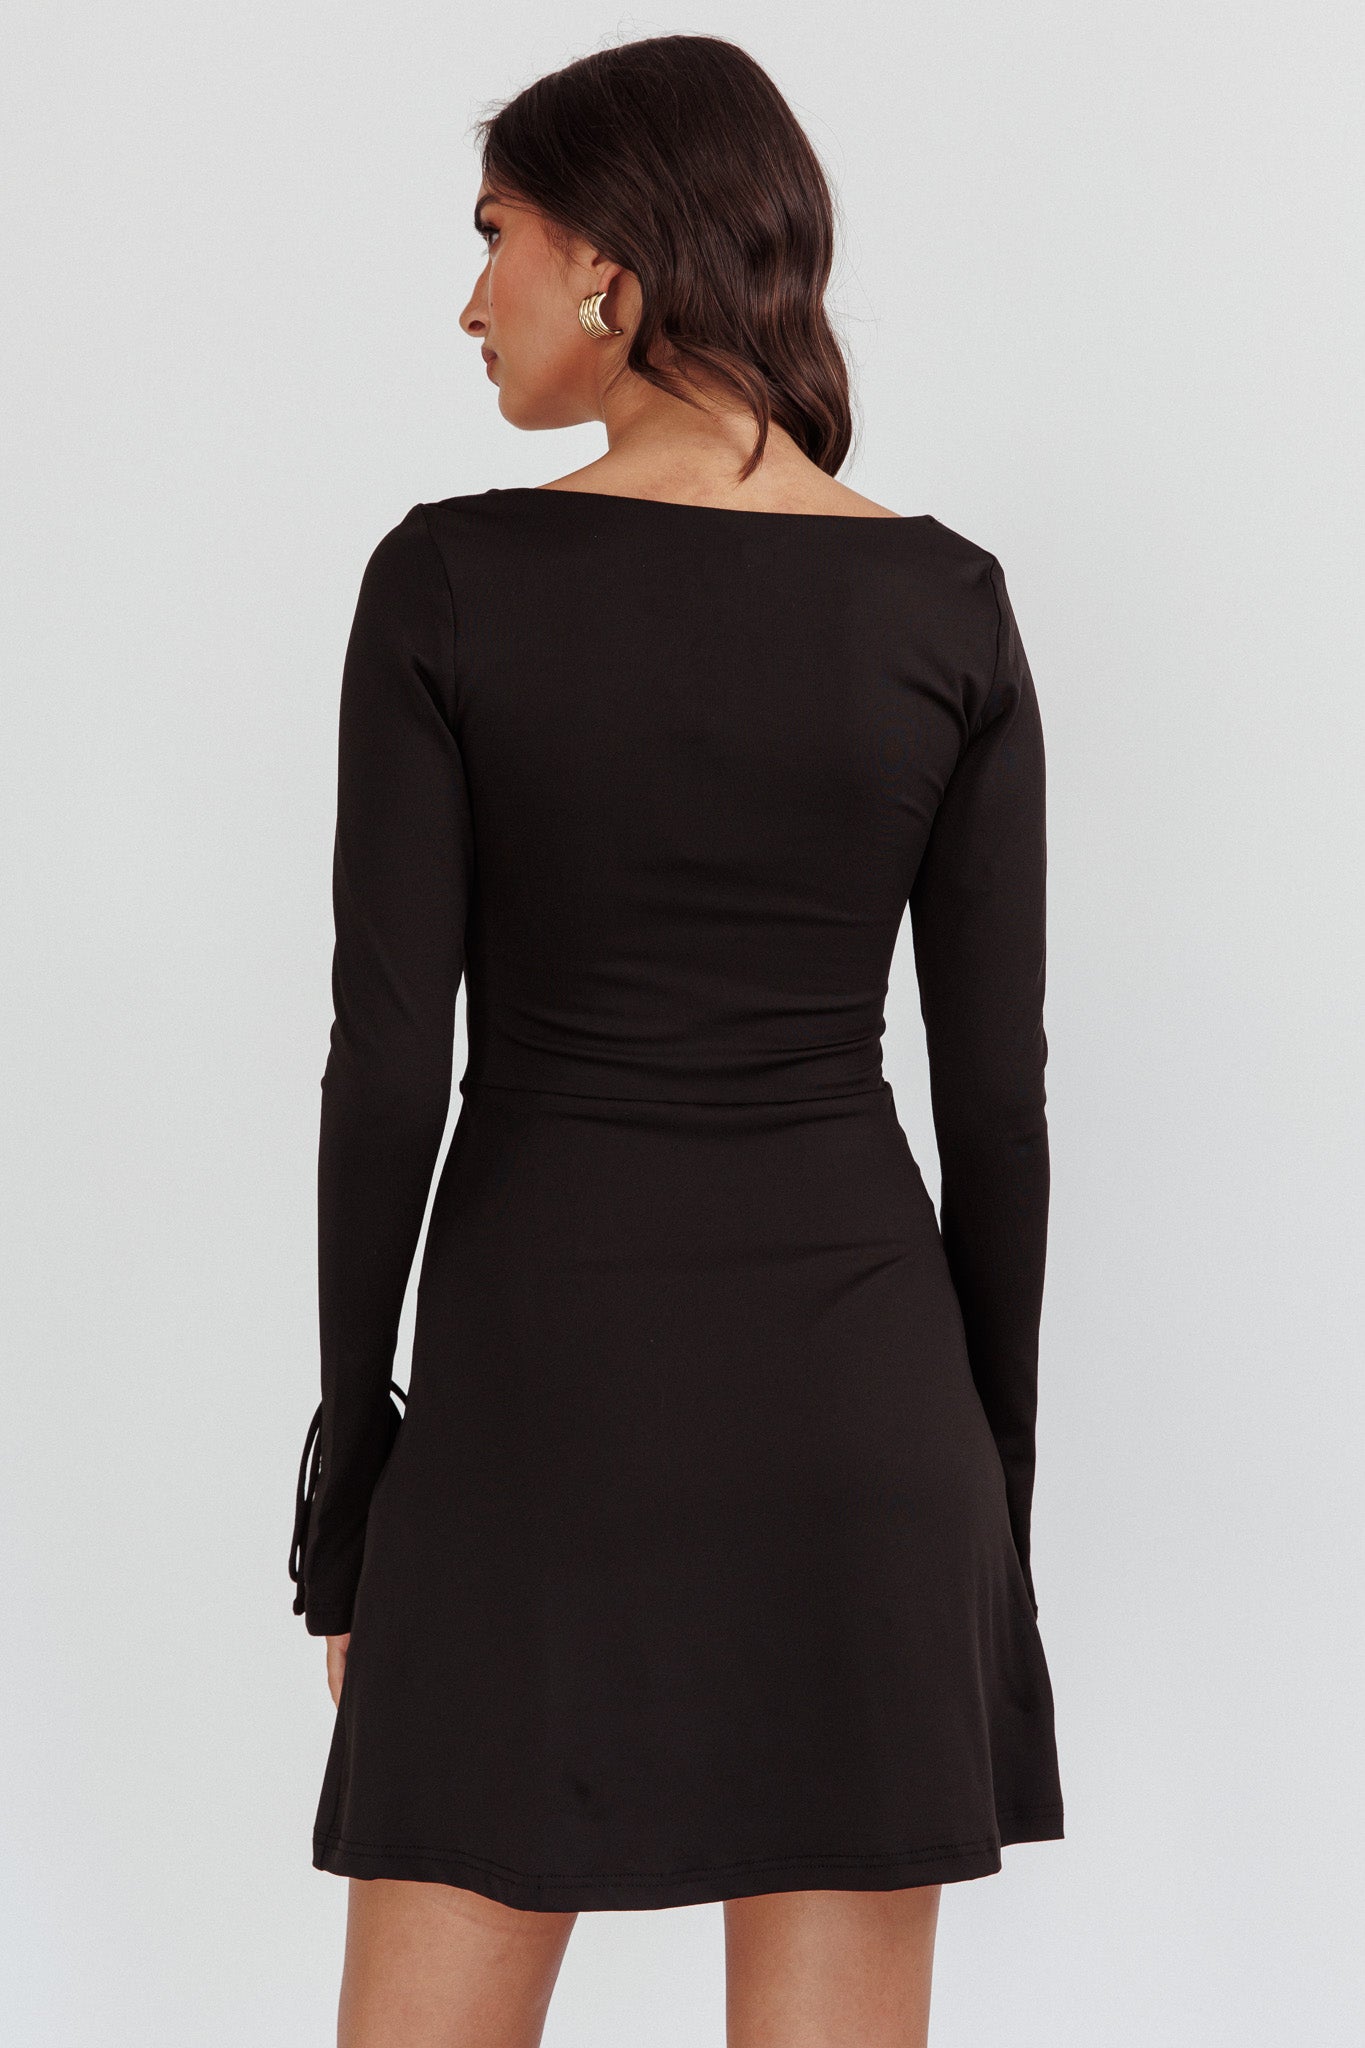 Black 2 In 1 Long Sleeve Under Boob Slinky Mini Dress